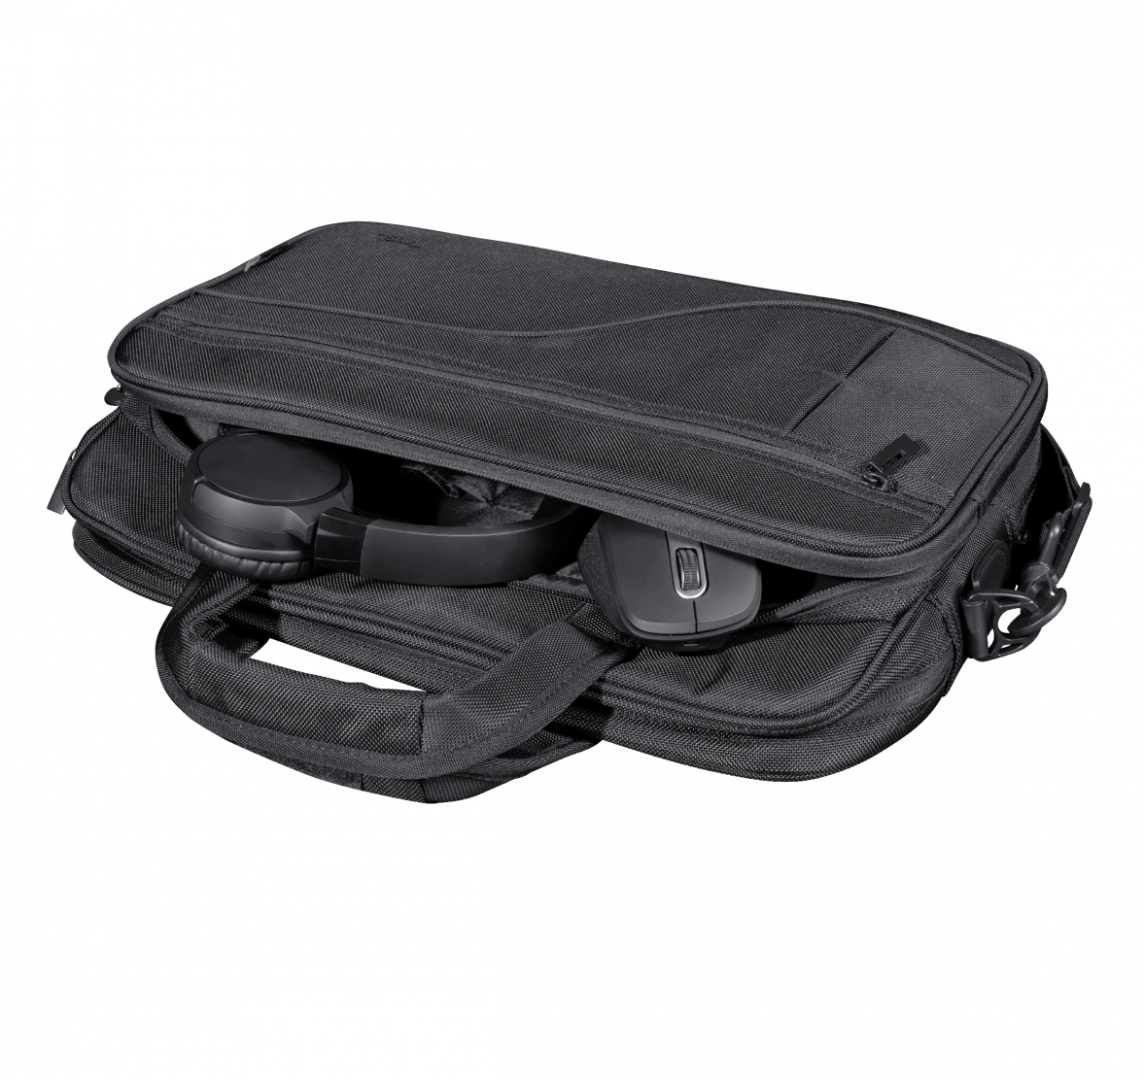 Geanta Trust Sydney Carry Bag for 17.3" laptops